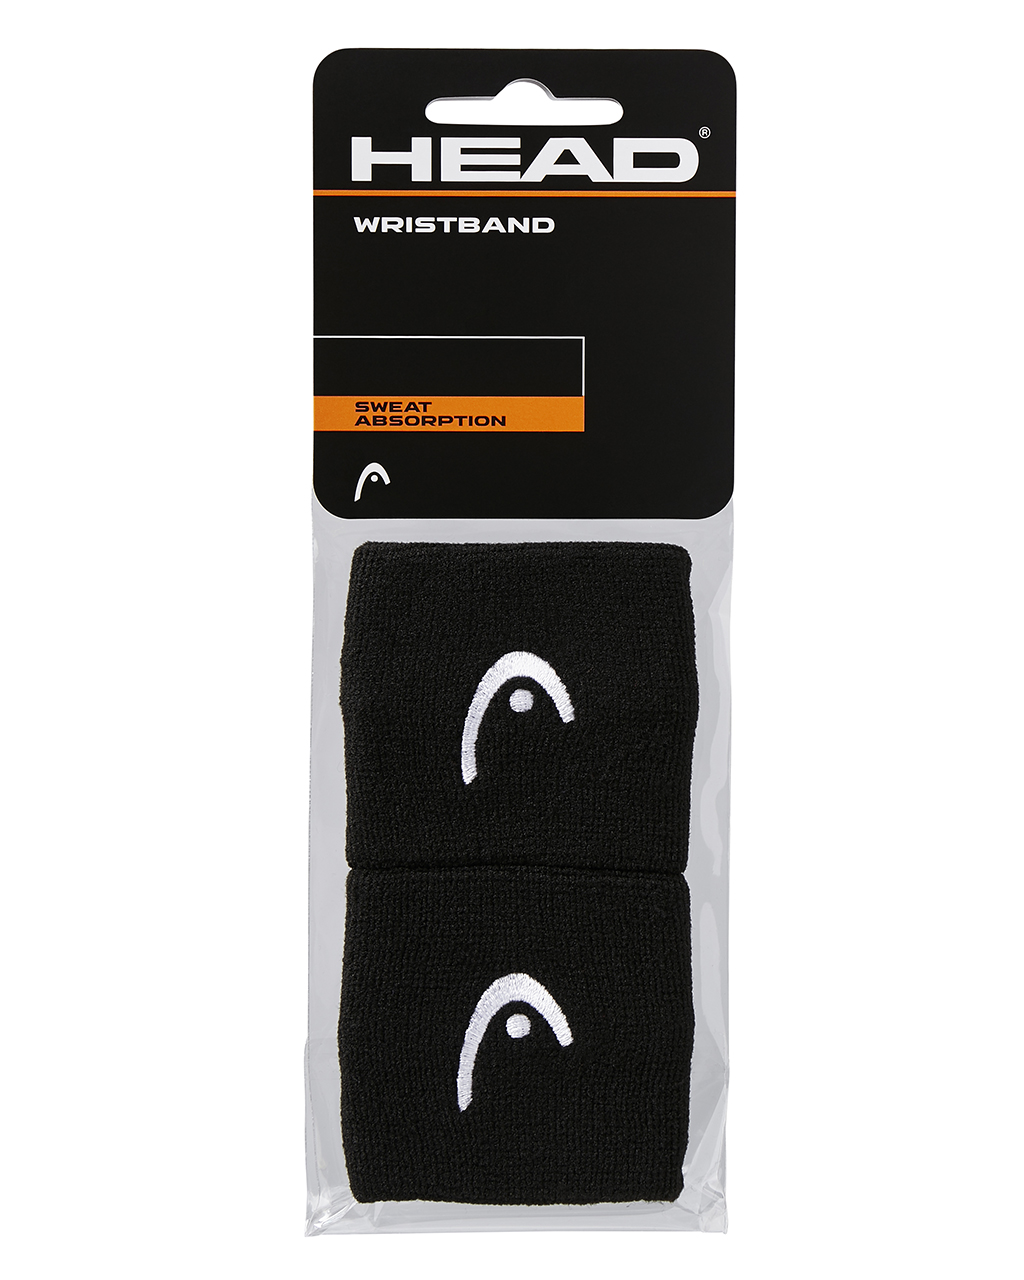 Head Wristband 2.5